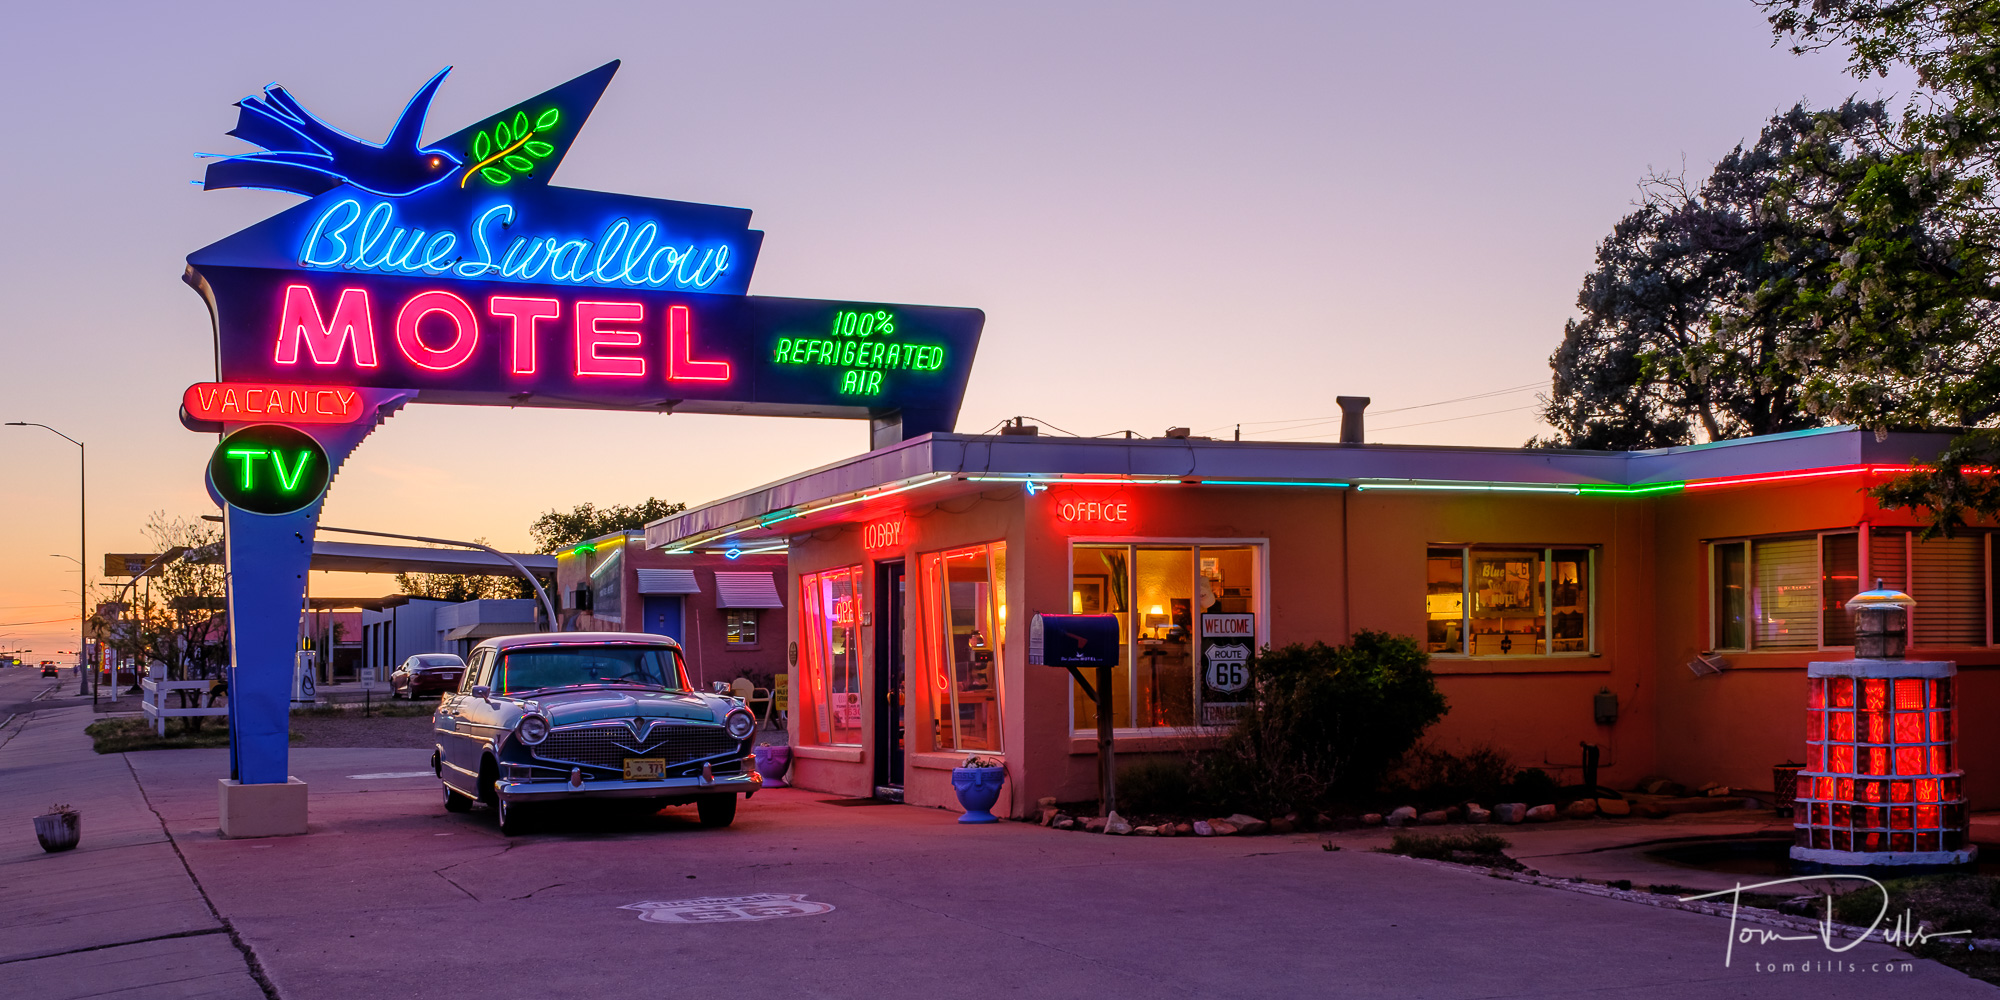 The Blue Swallow Motel on Historic Route 66 in Tucumcari, New Mexico